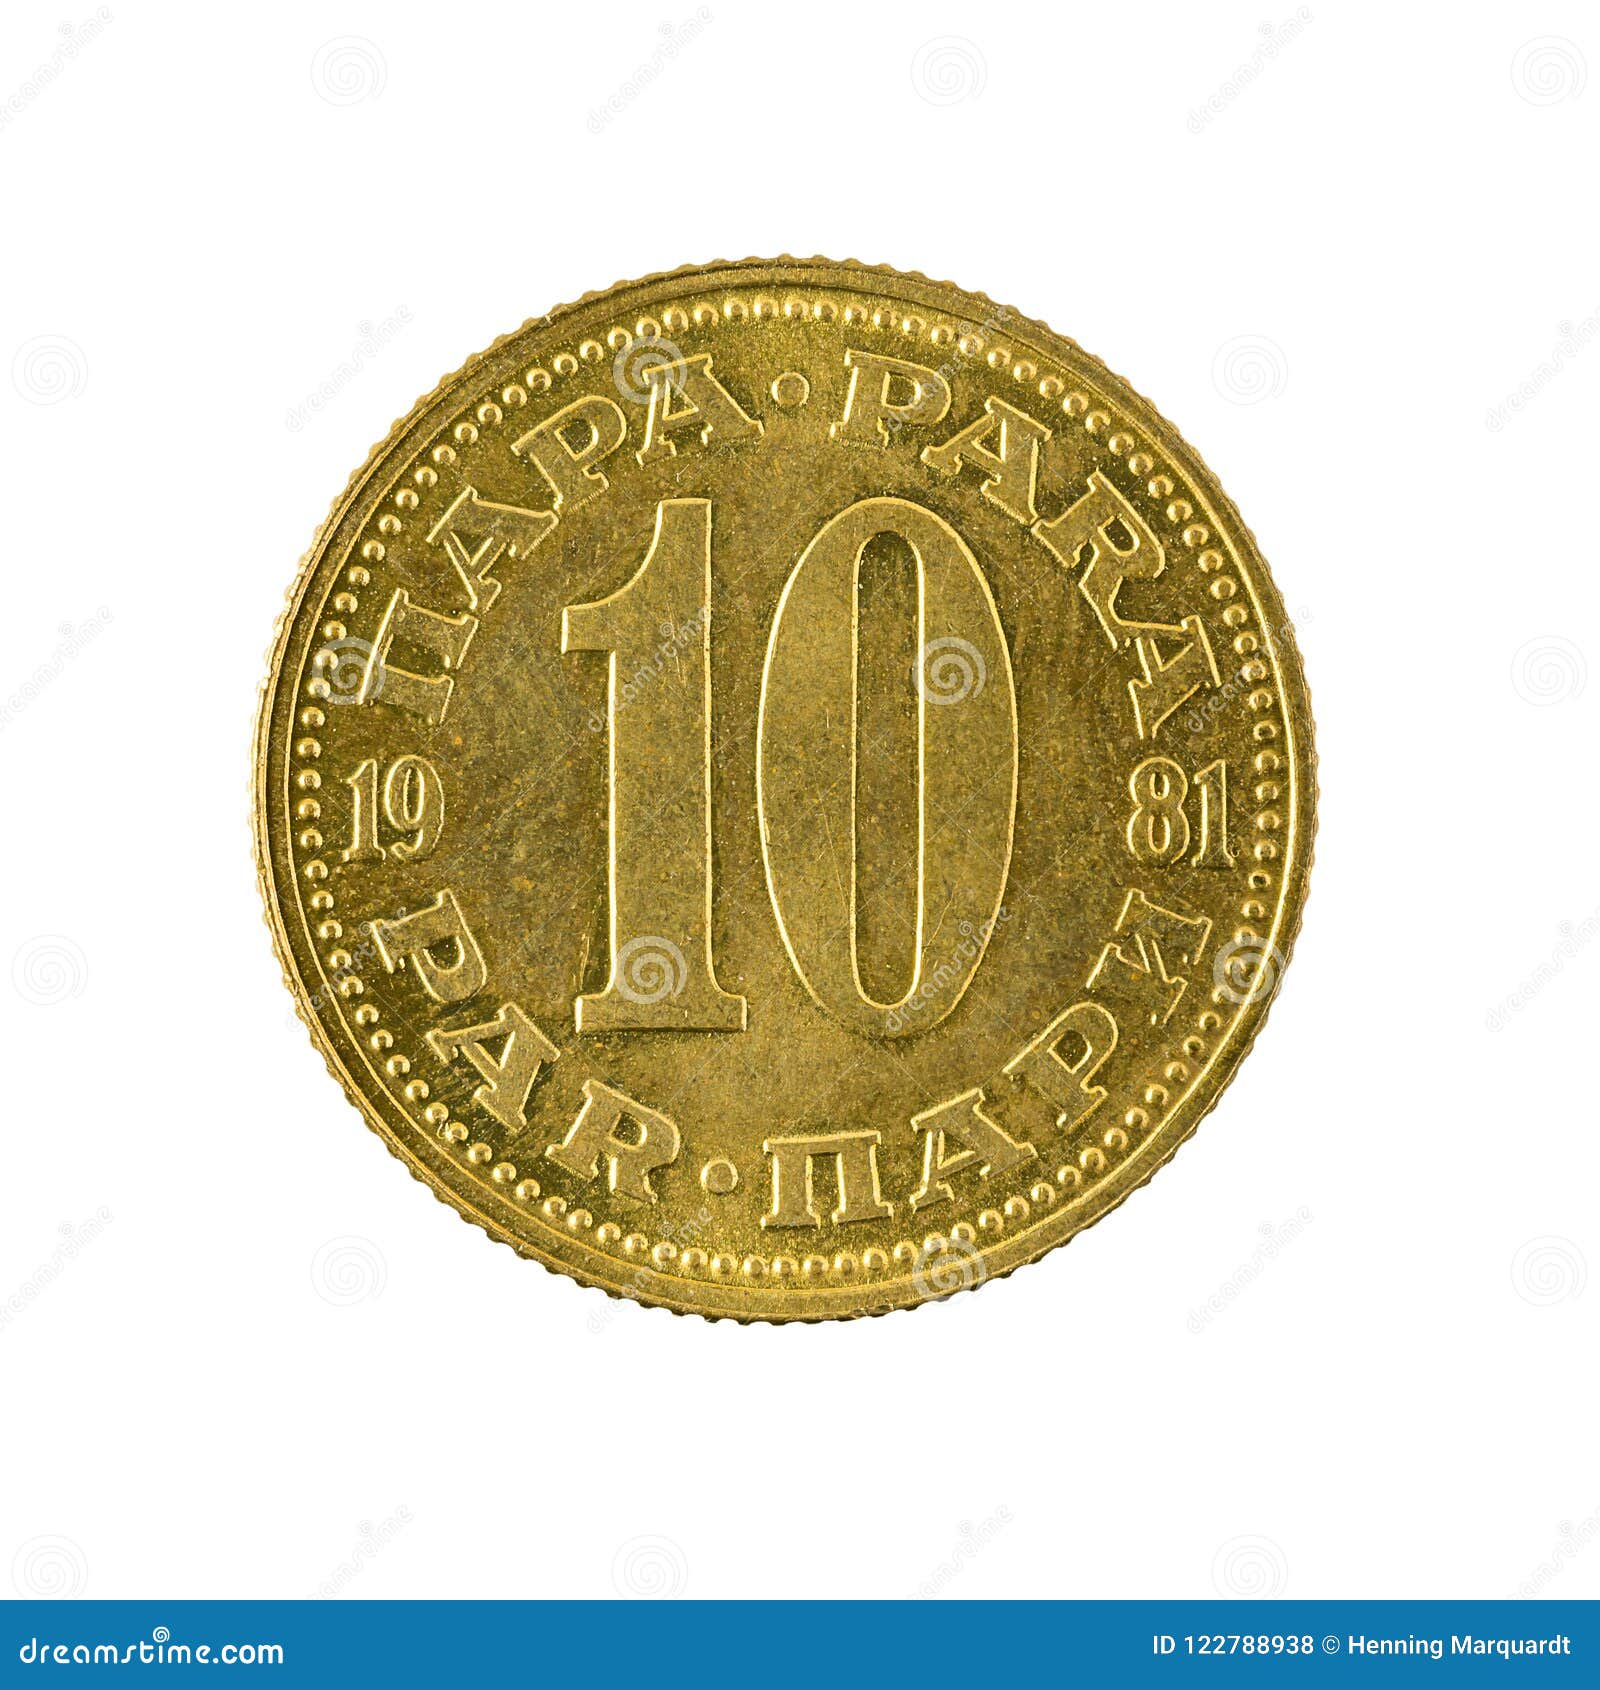 10 Yugoslav Para Coin 1959 Isolated on White Background Stock Photo ...